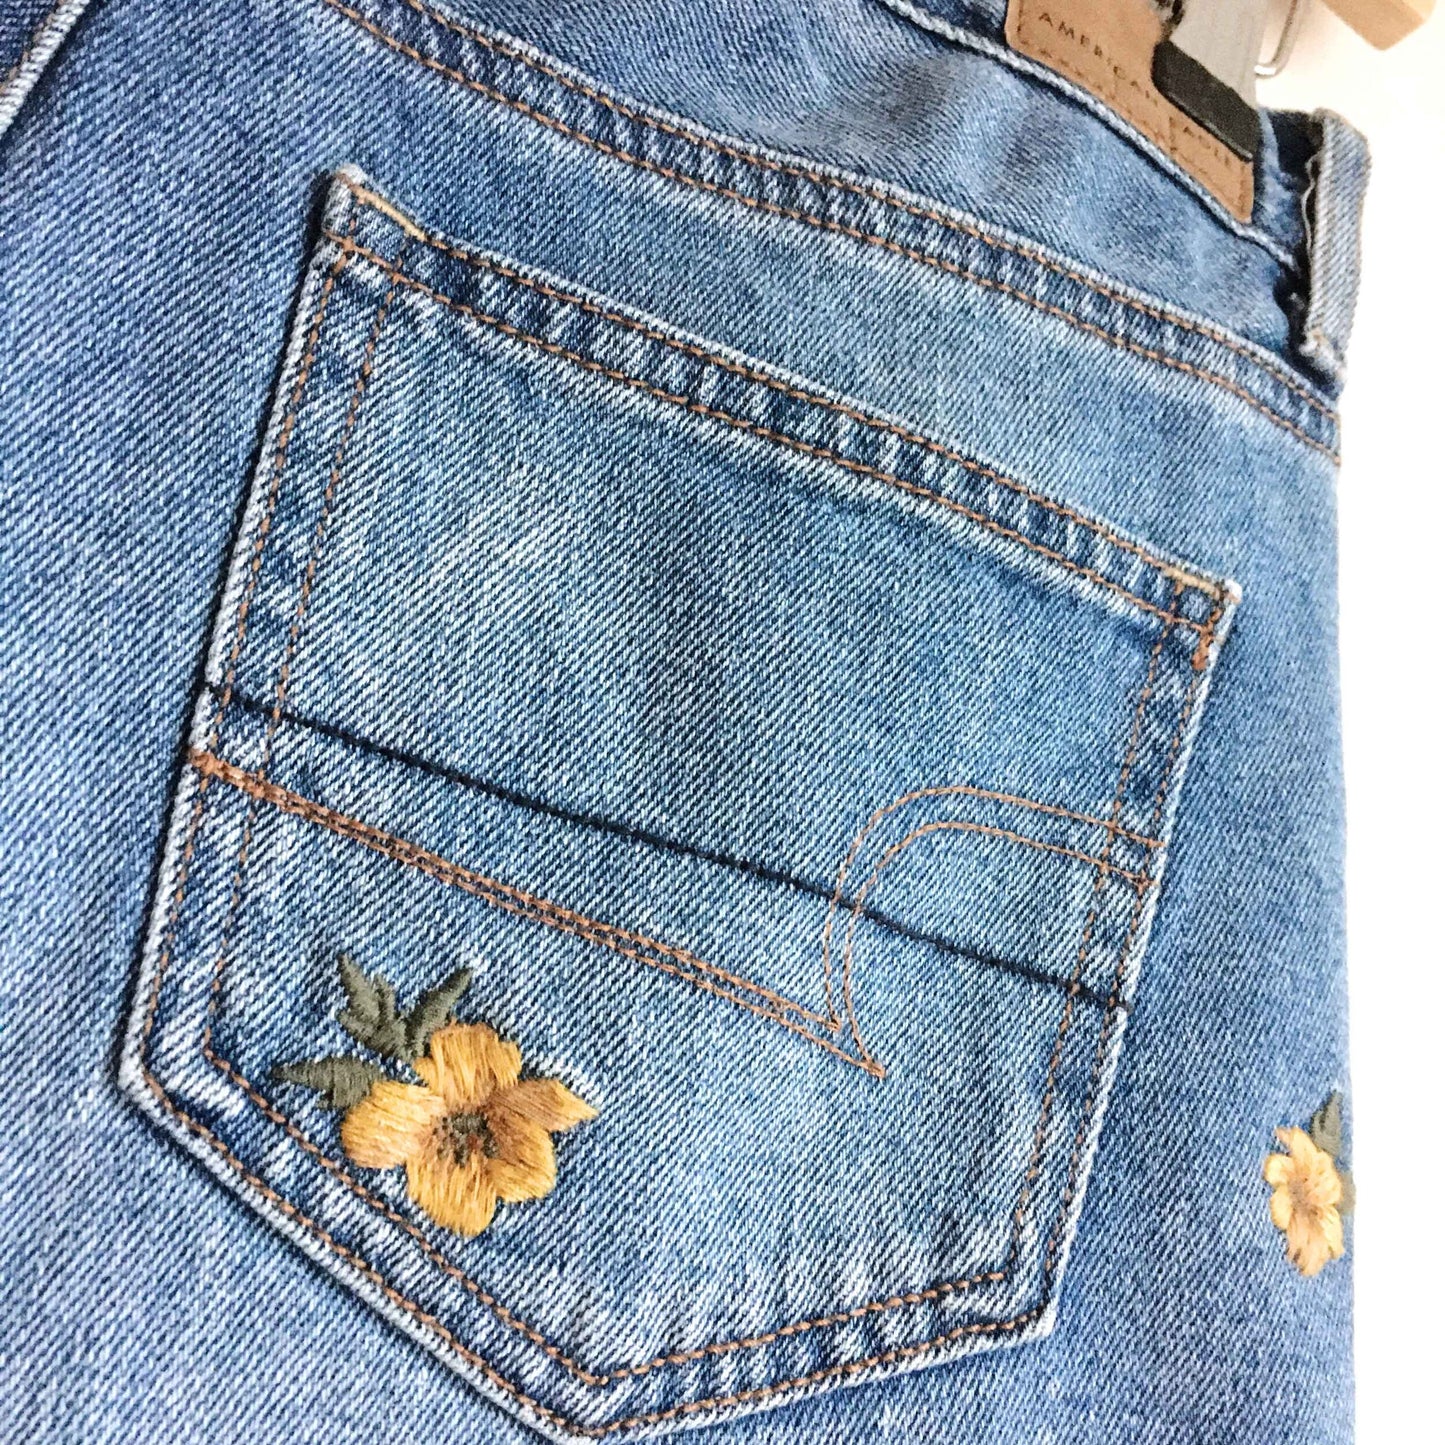 American Eagle daisy high waist jean shorts - size 0